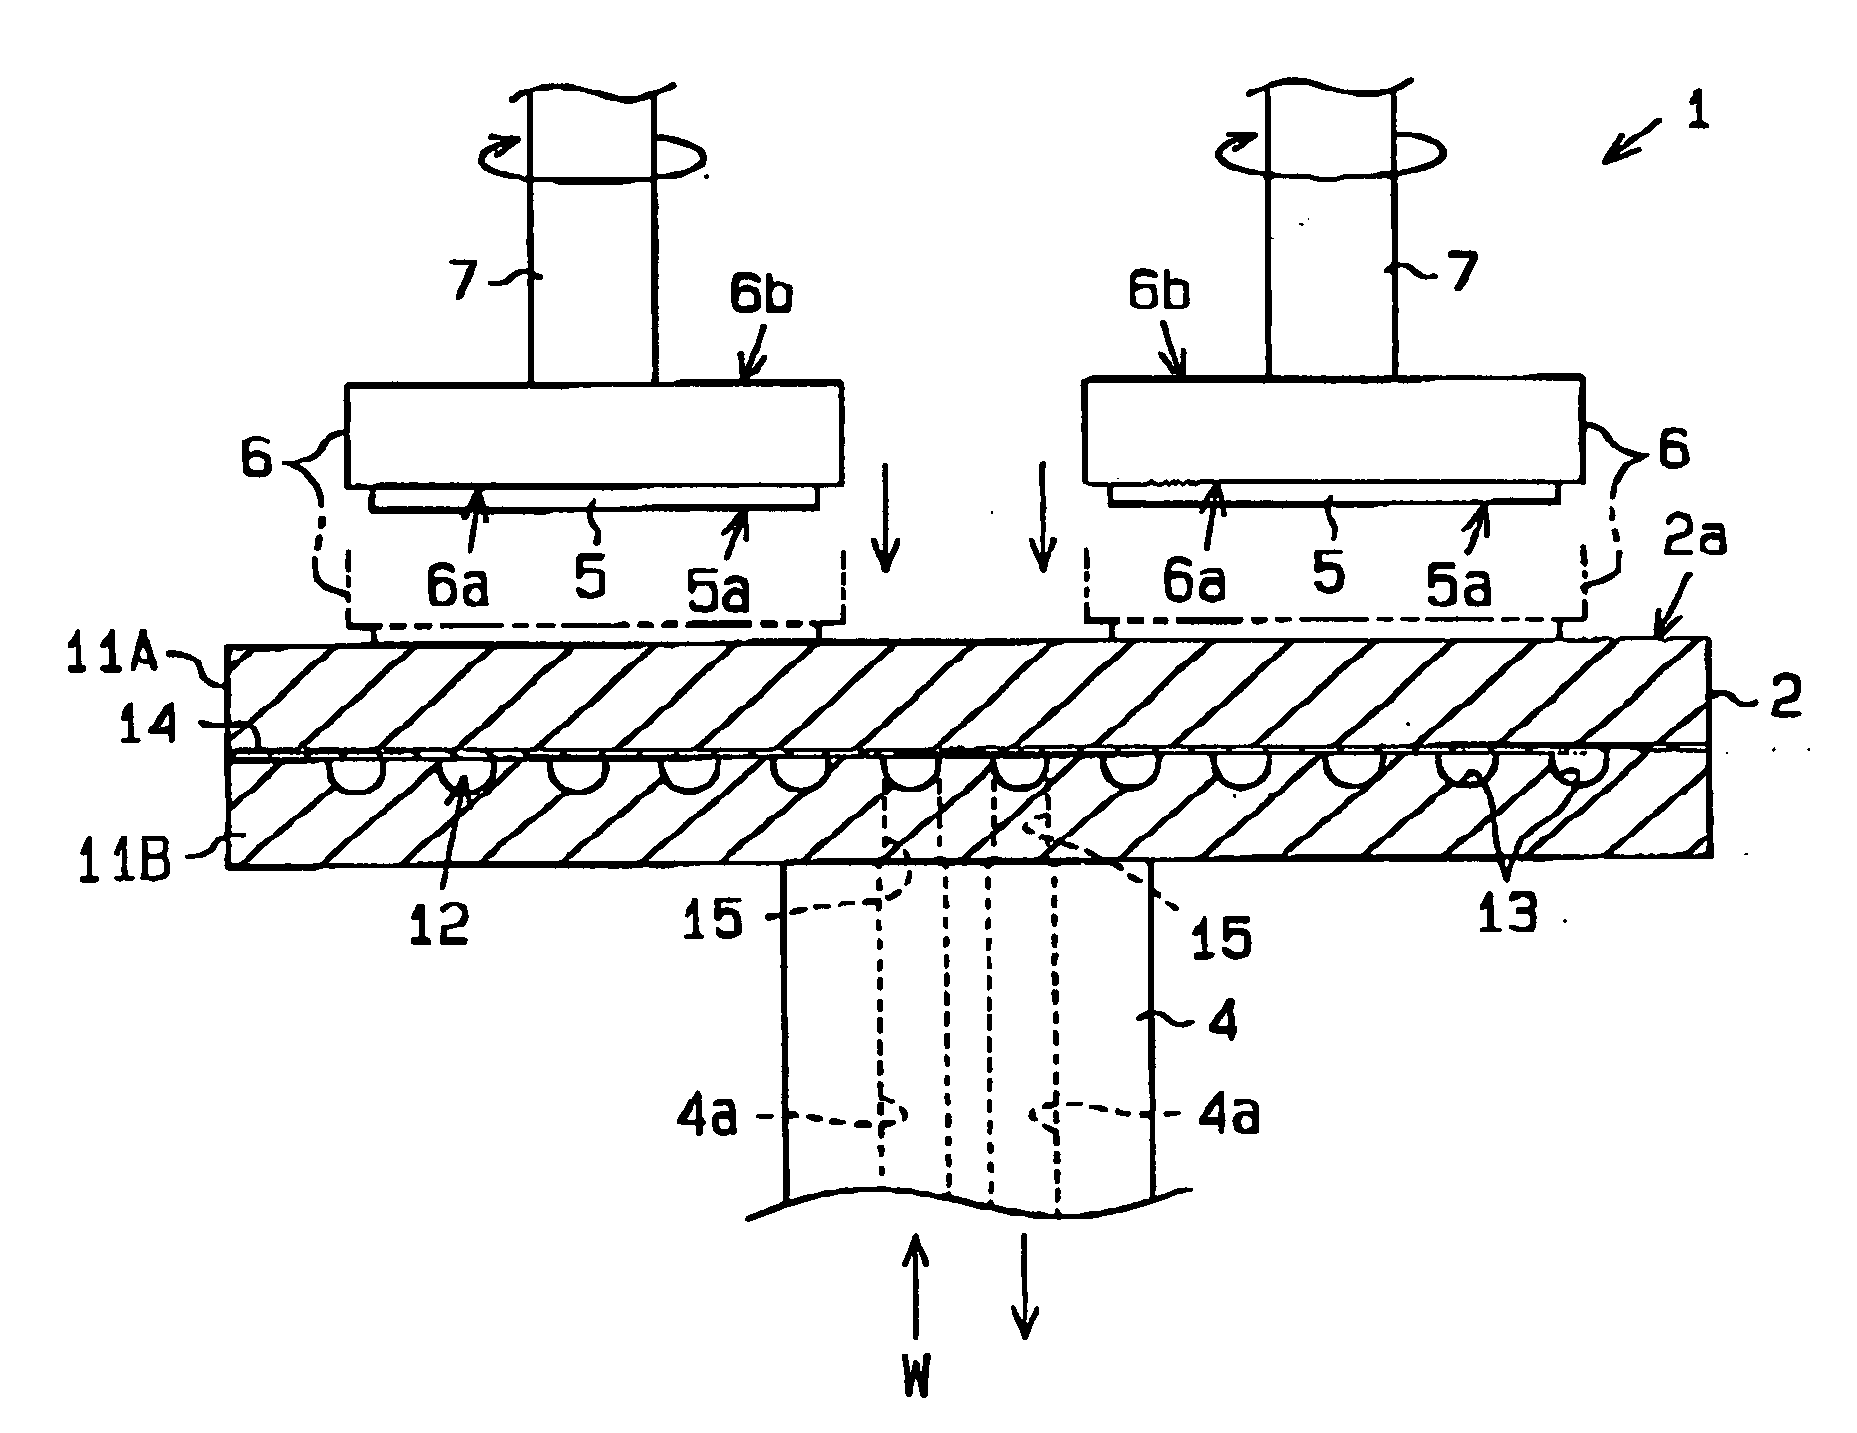 Table of wafer of polishing apparatus, method for polishing semiconductor wafer, and method for manufacturing semiconductor wafer